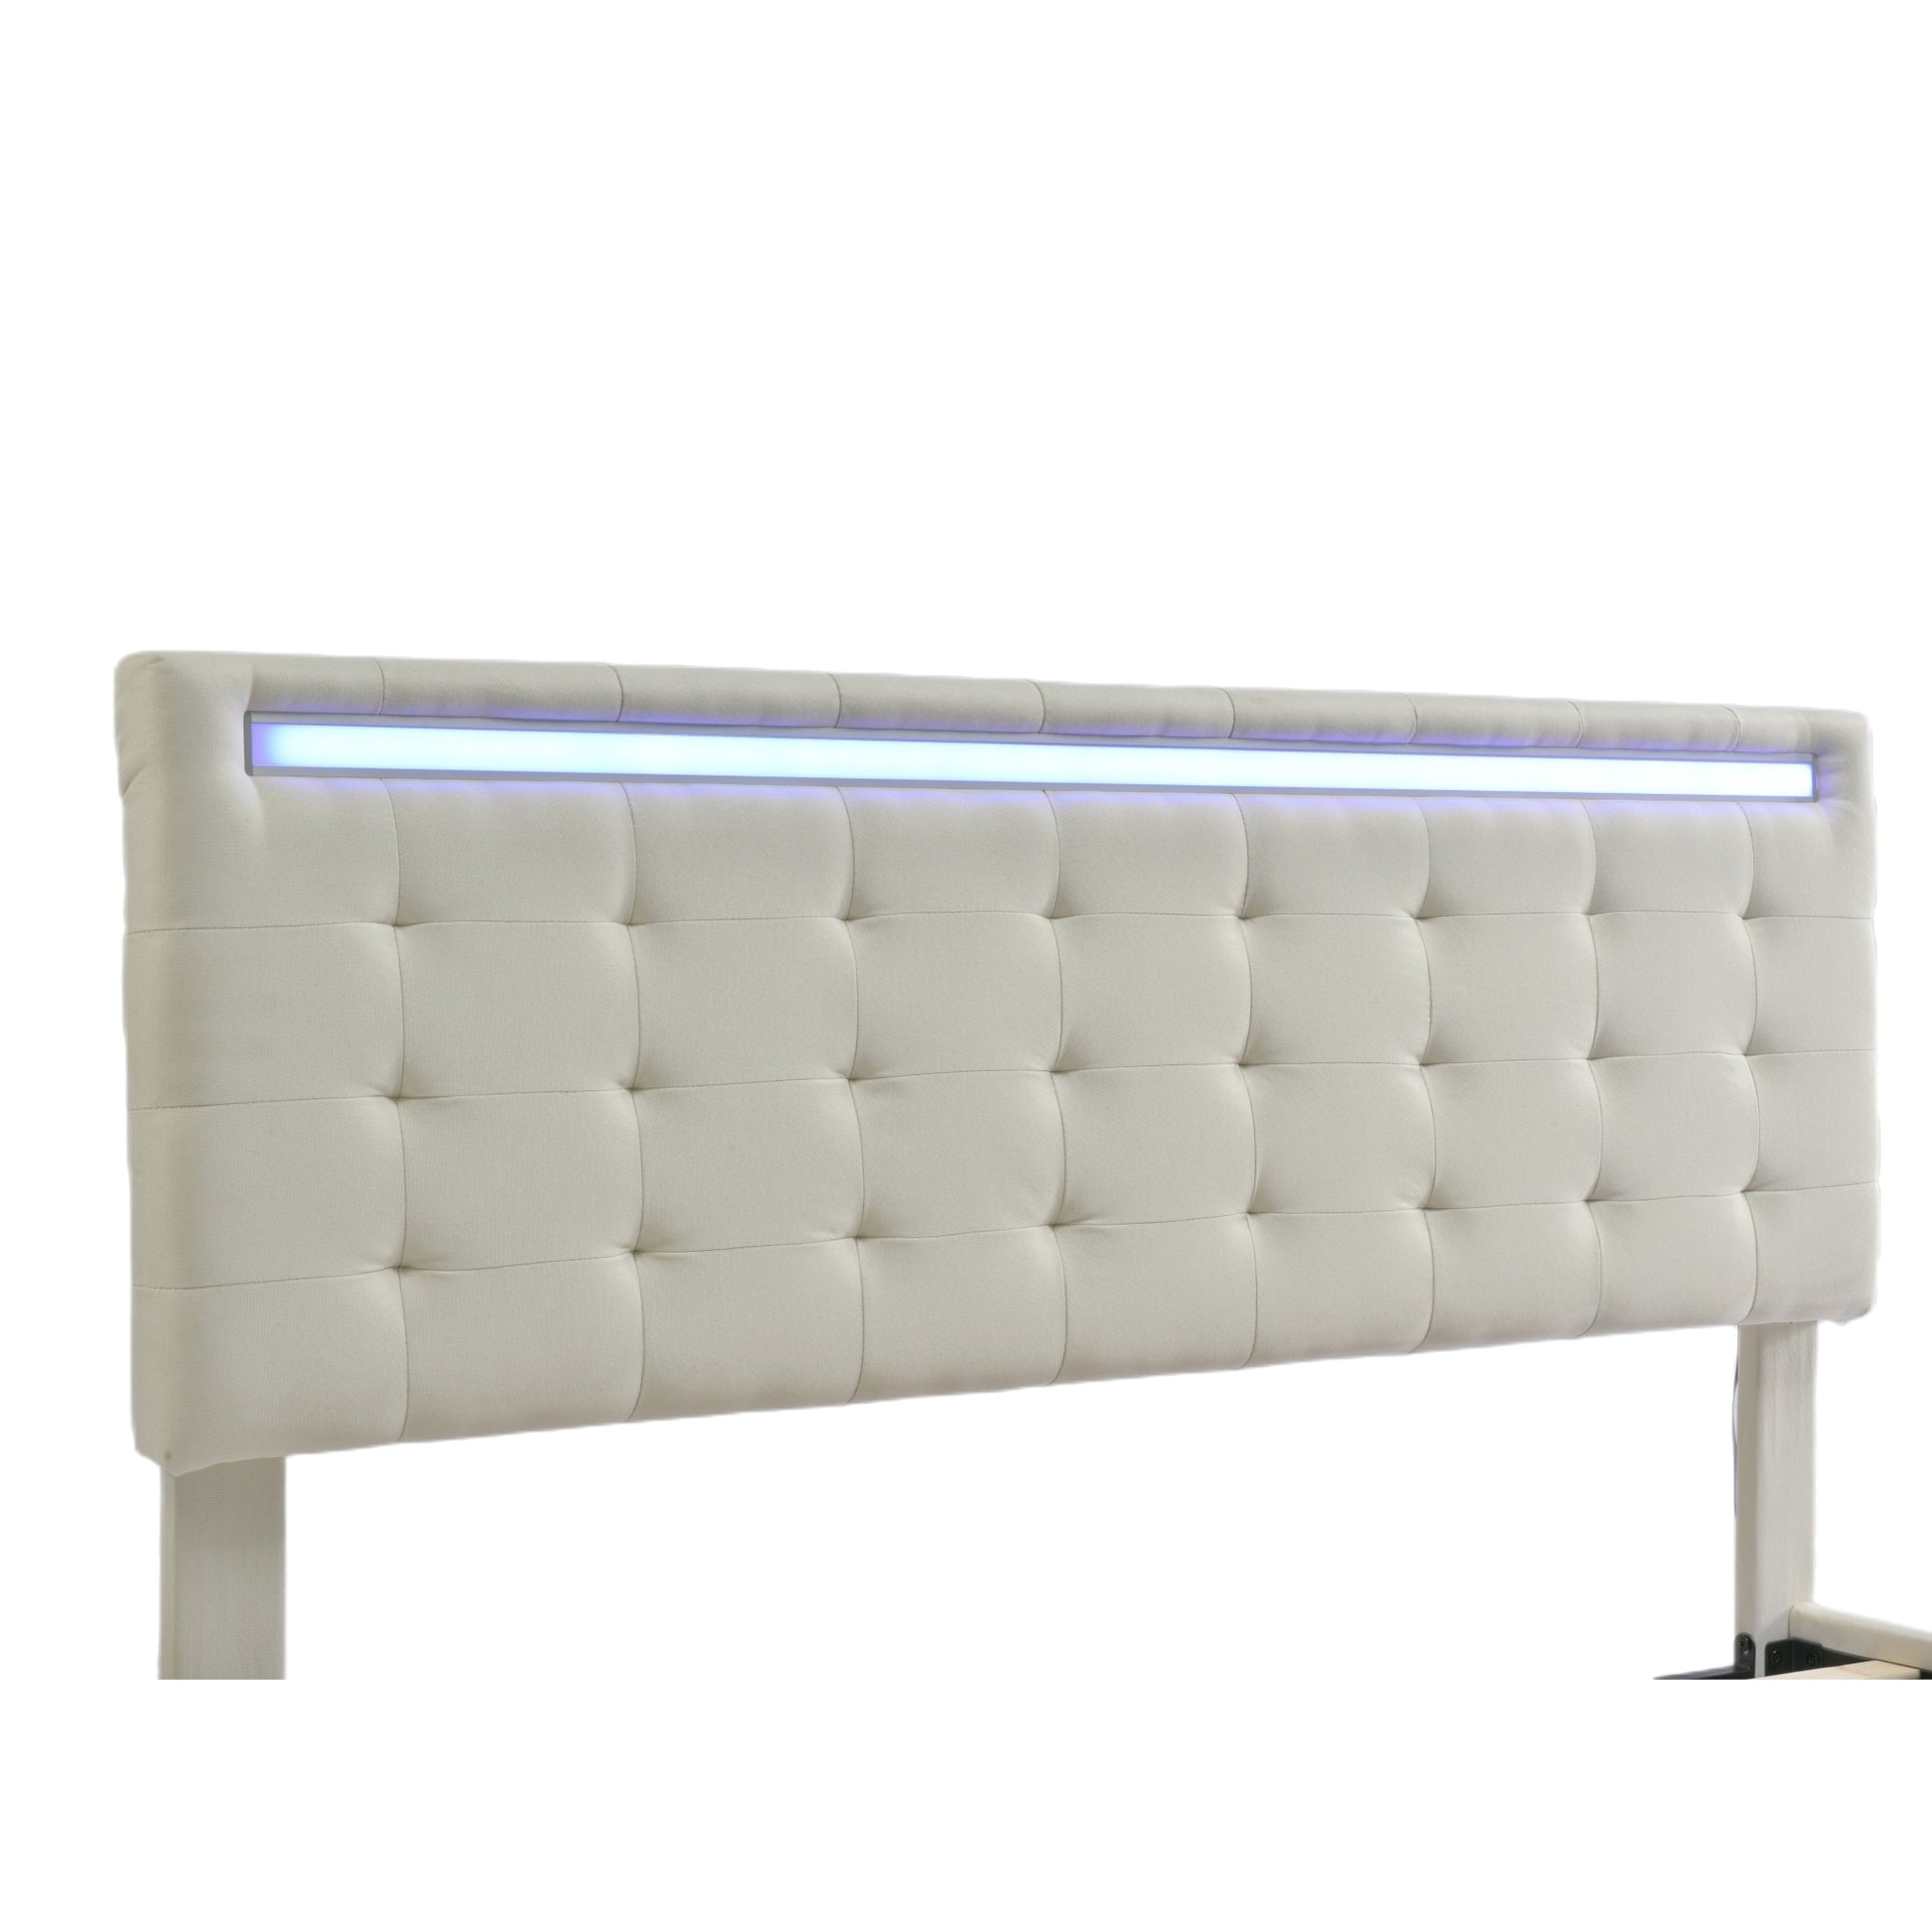 Queen Size Floating Bed Frame with LED Lights and USB Charging,Modern Upholstered Platform LED Bed Frame,Beige - Enova Luxe Home Store